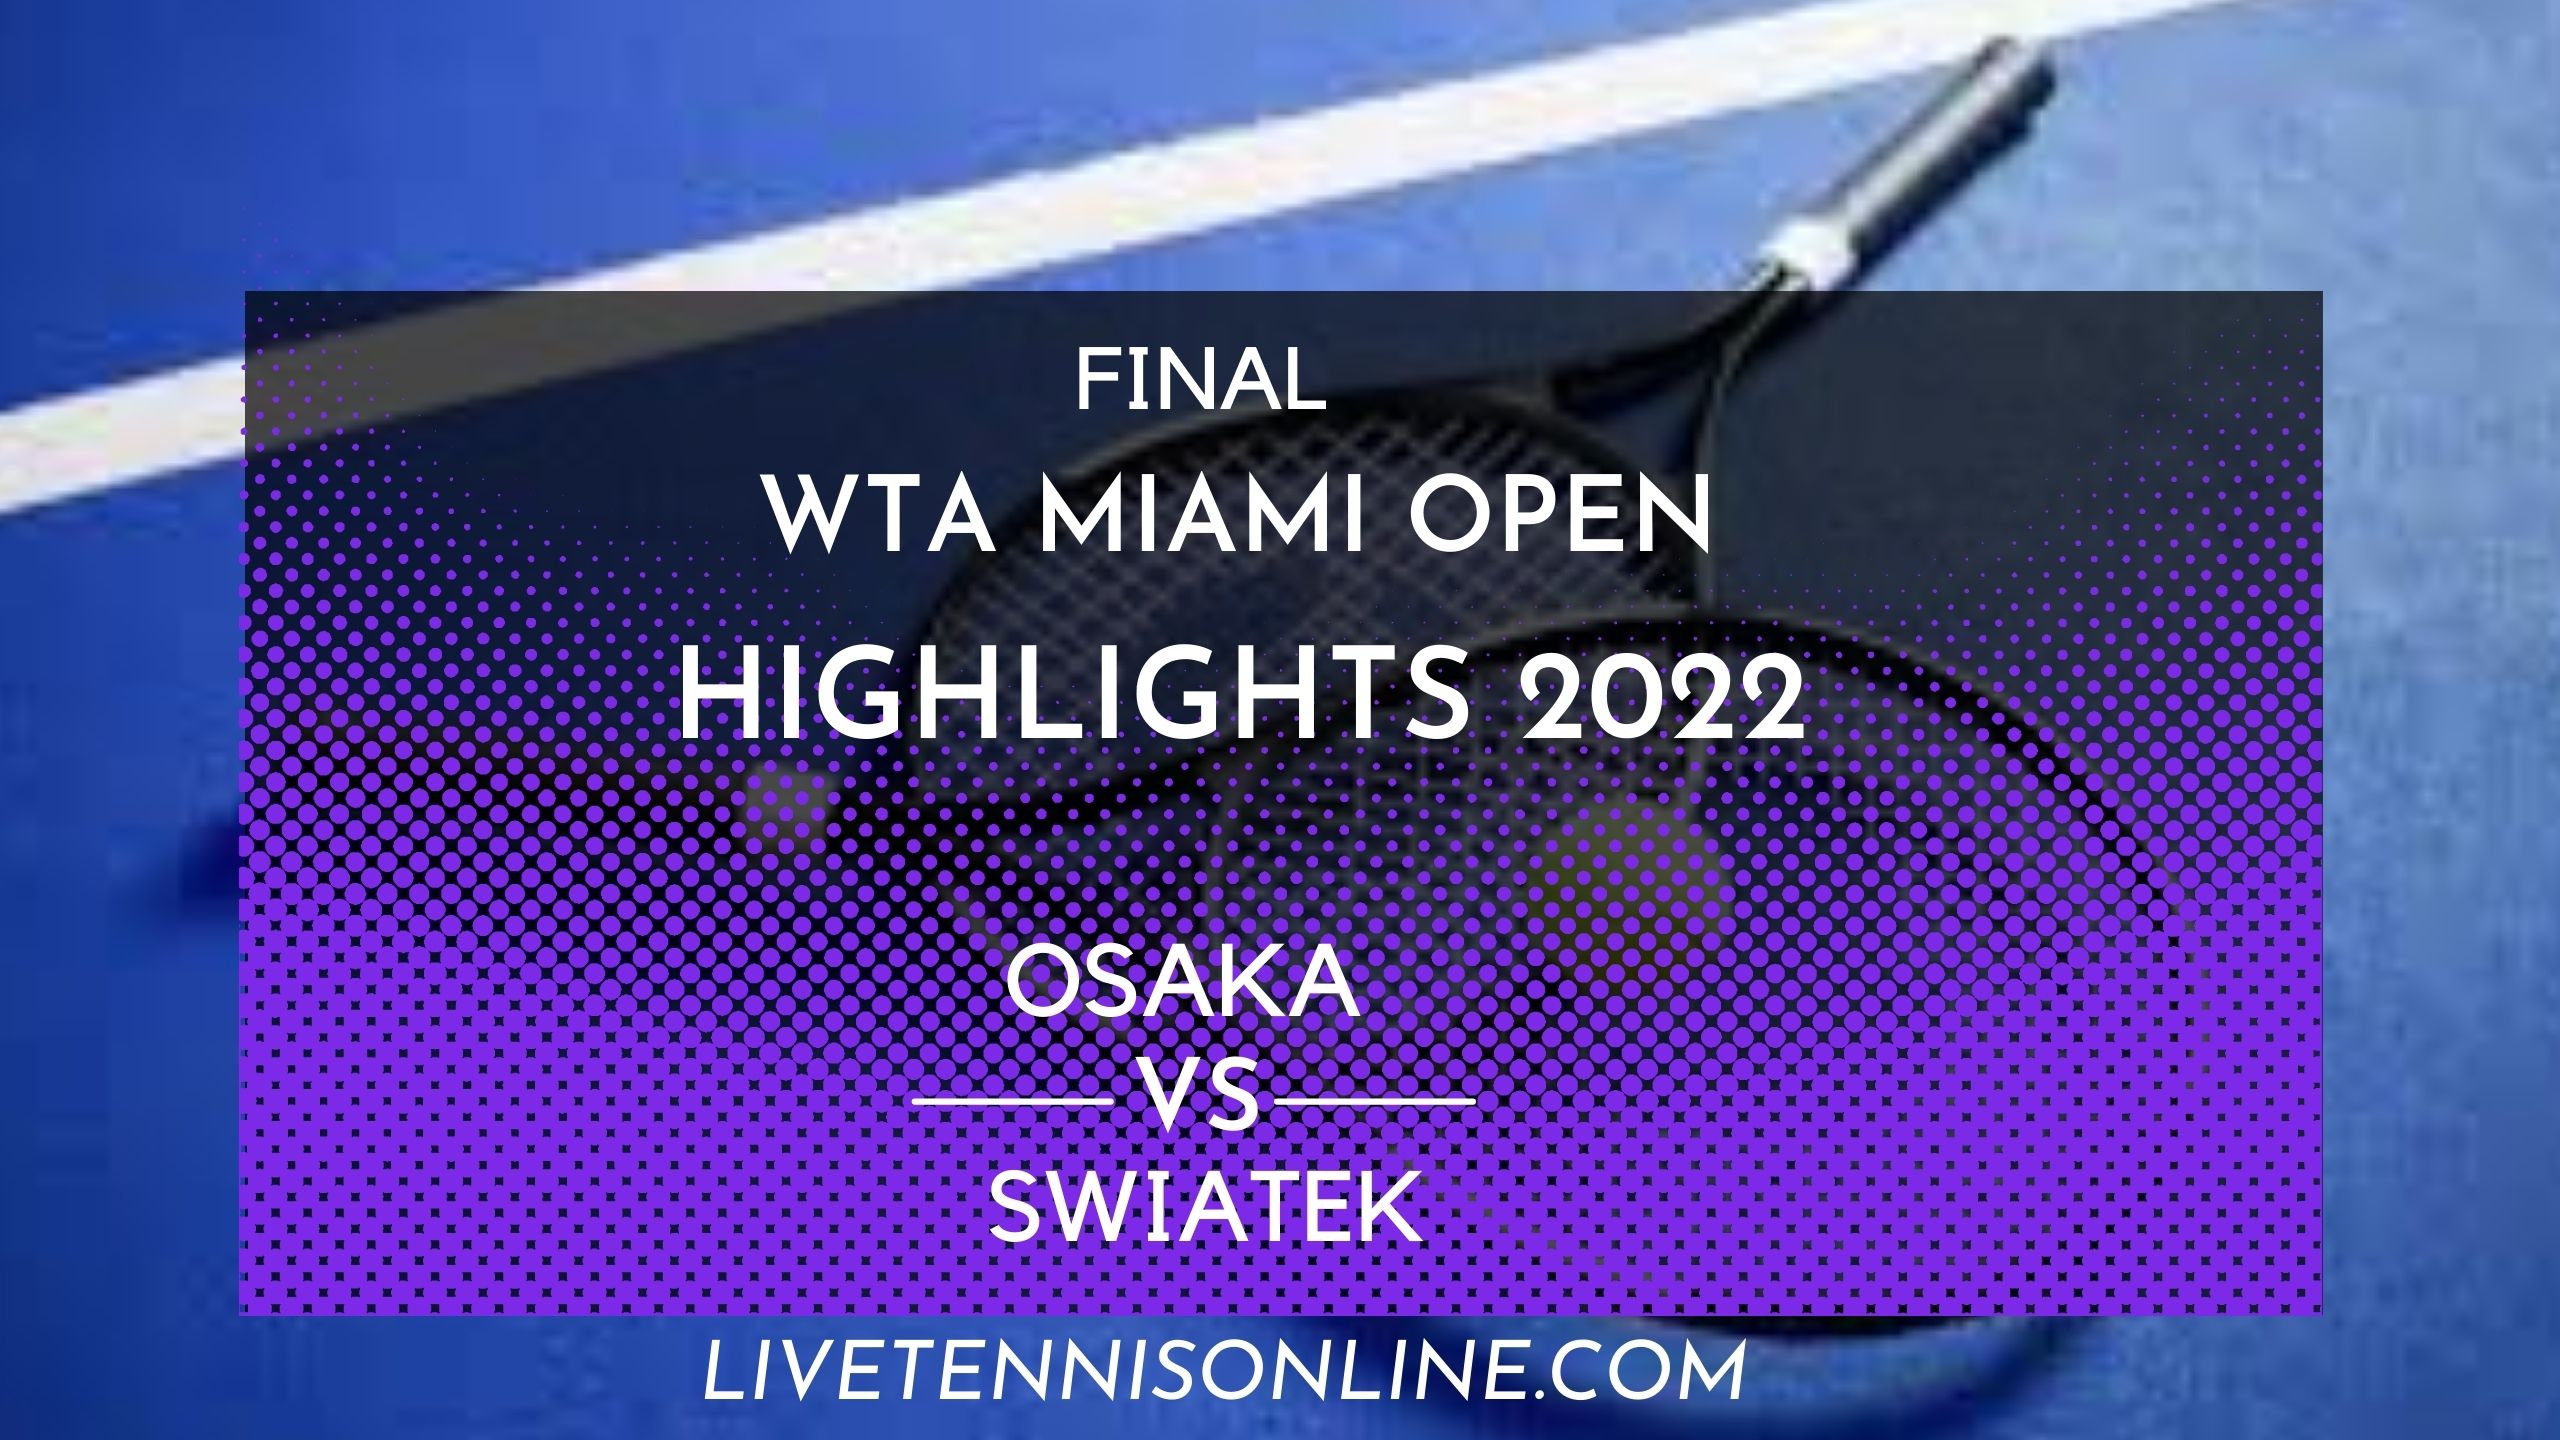 Osaka Vs Swiatek Final Highlights 2022 Miami Open